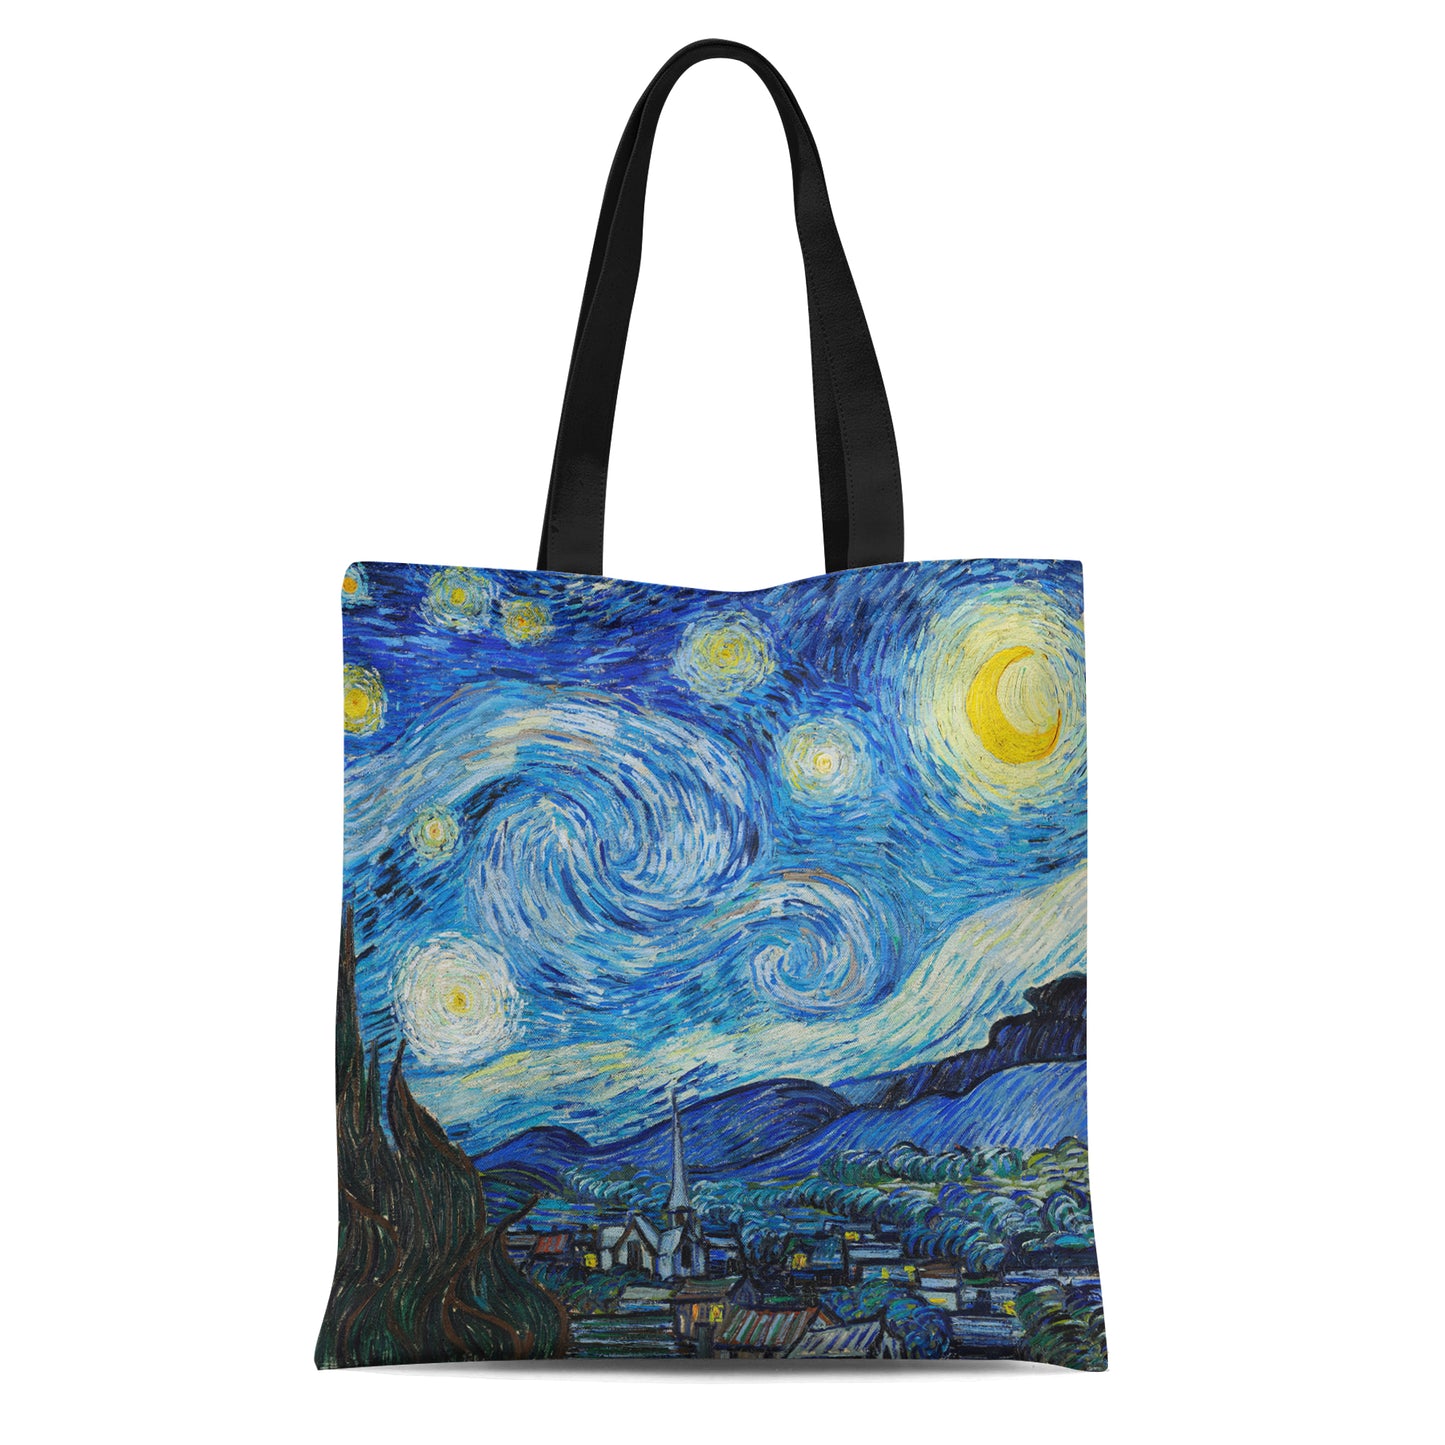 Van Gogh Tote Bag - The Starry Night